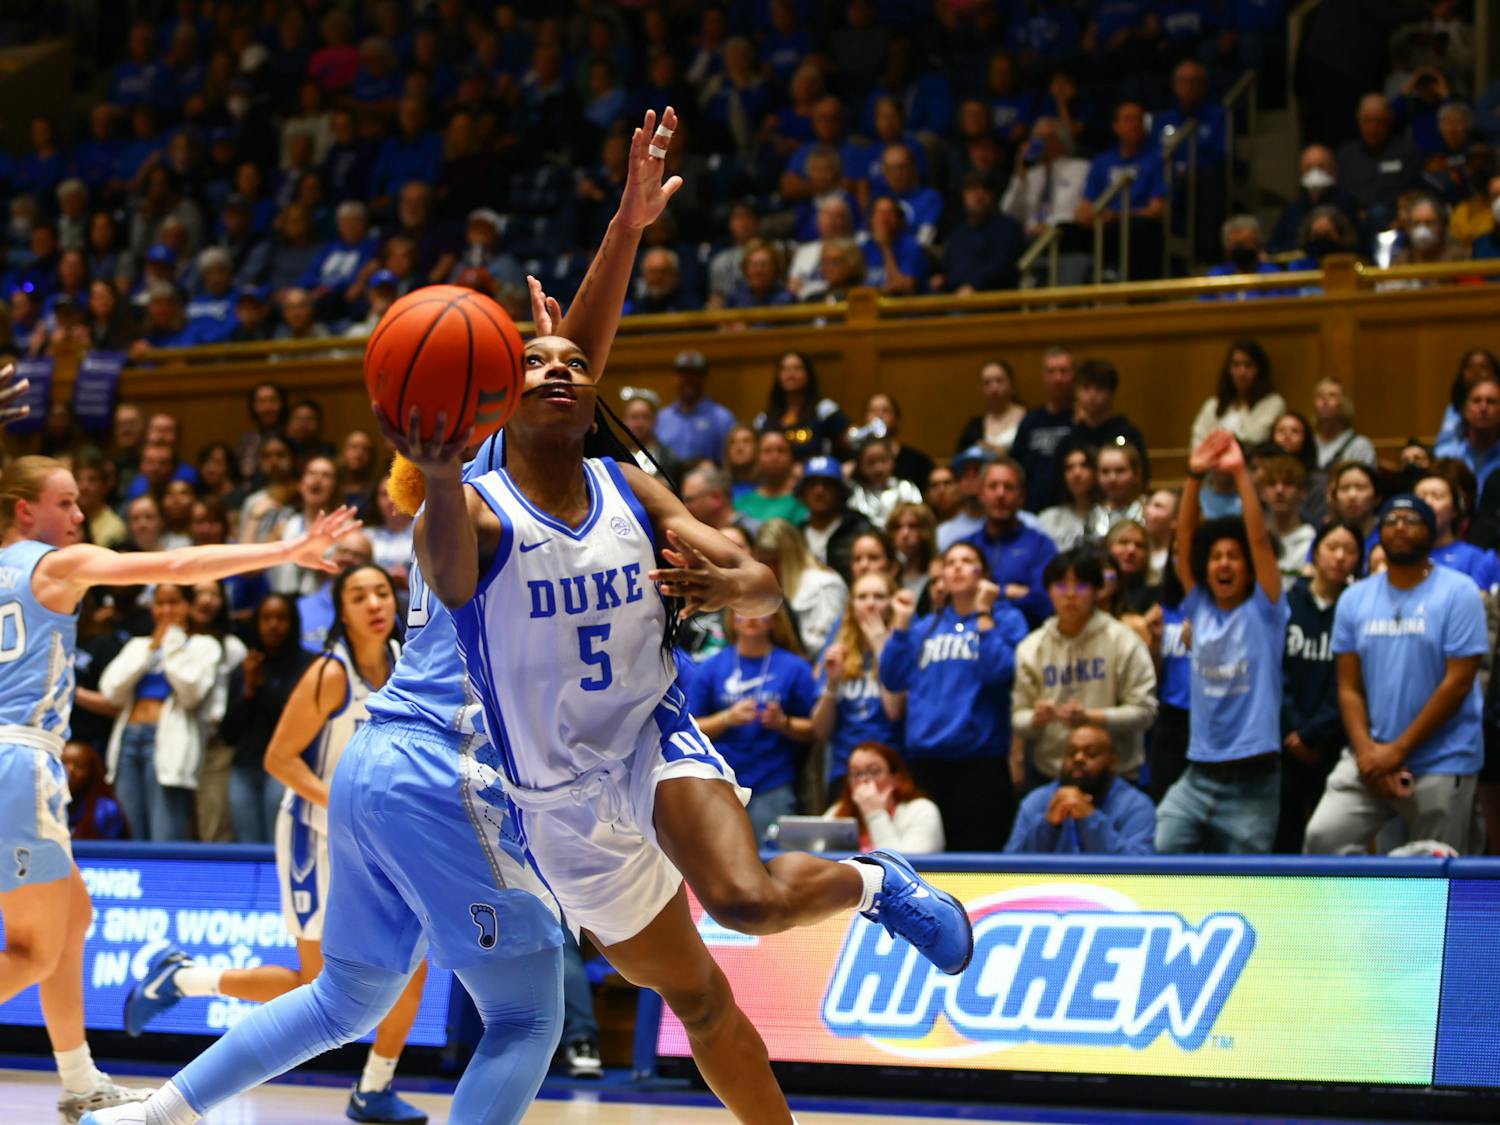 Oluchi Okananwa fights past a North Carolina defender on her way to the basket.